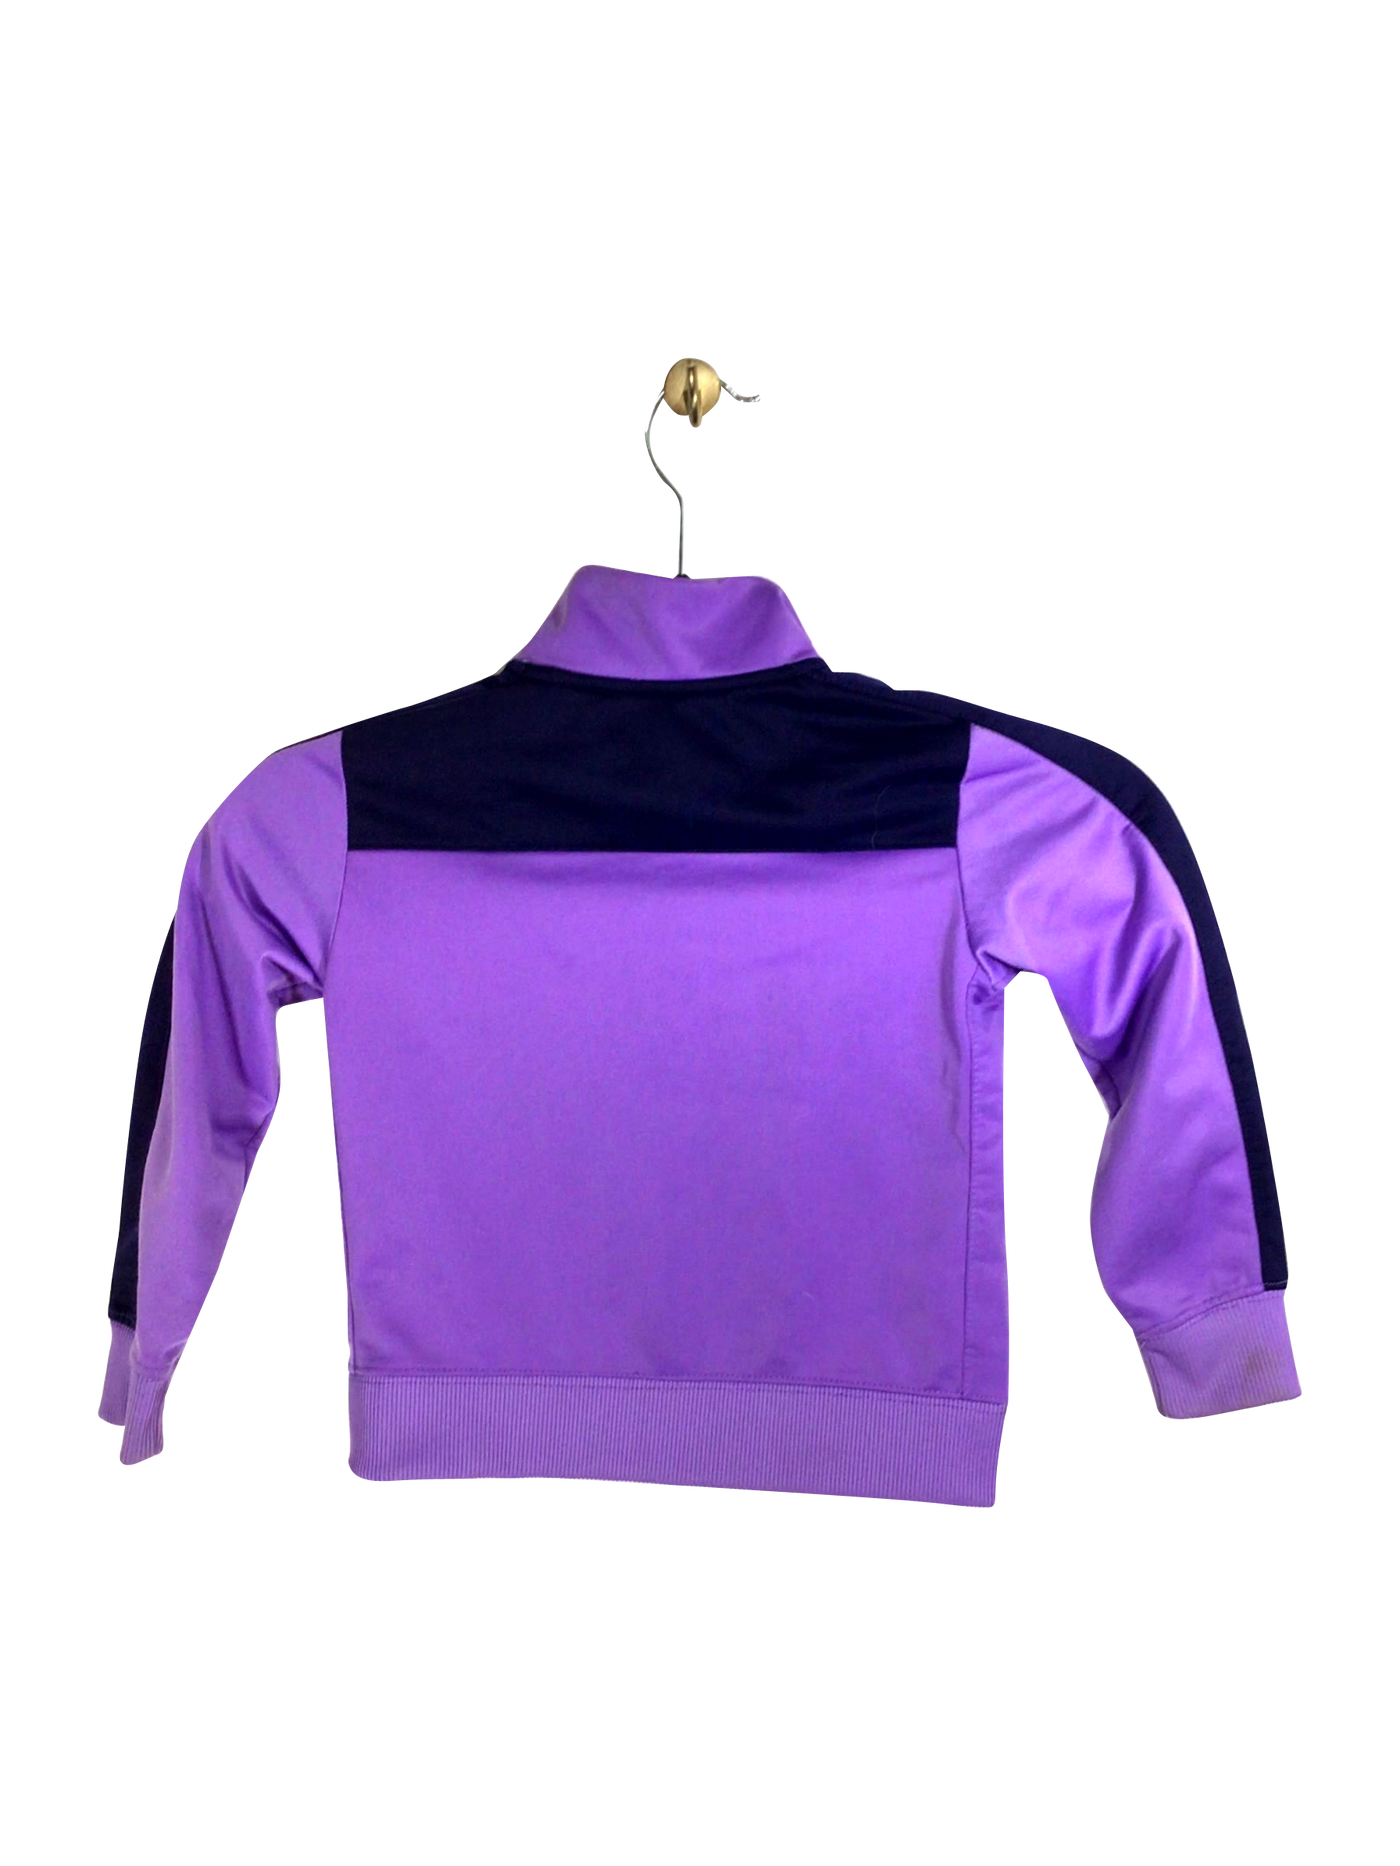 NIKE Sweatshirt Regular fit in Purple - Size 4 | 16.5 $ KOOP